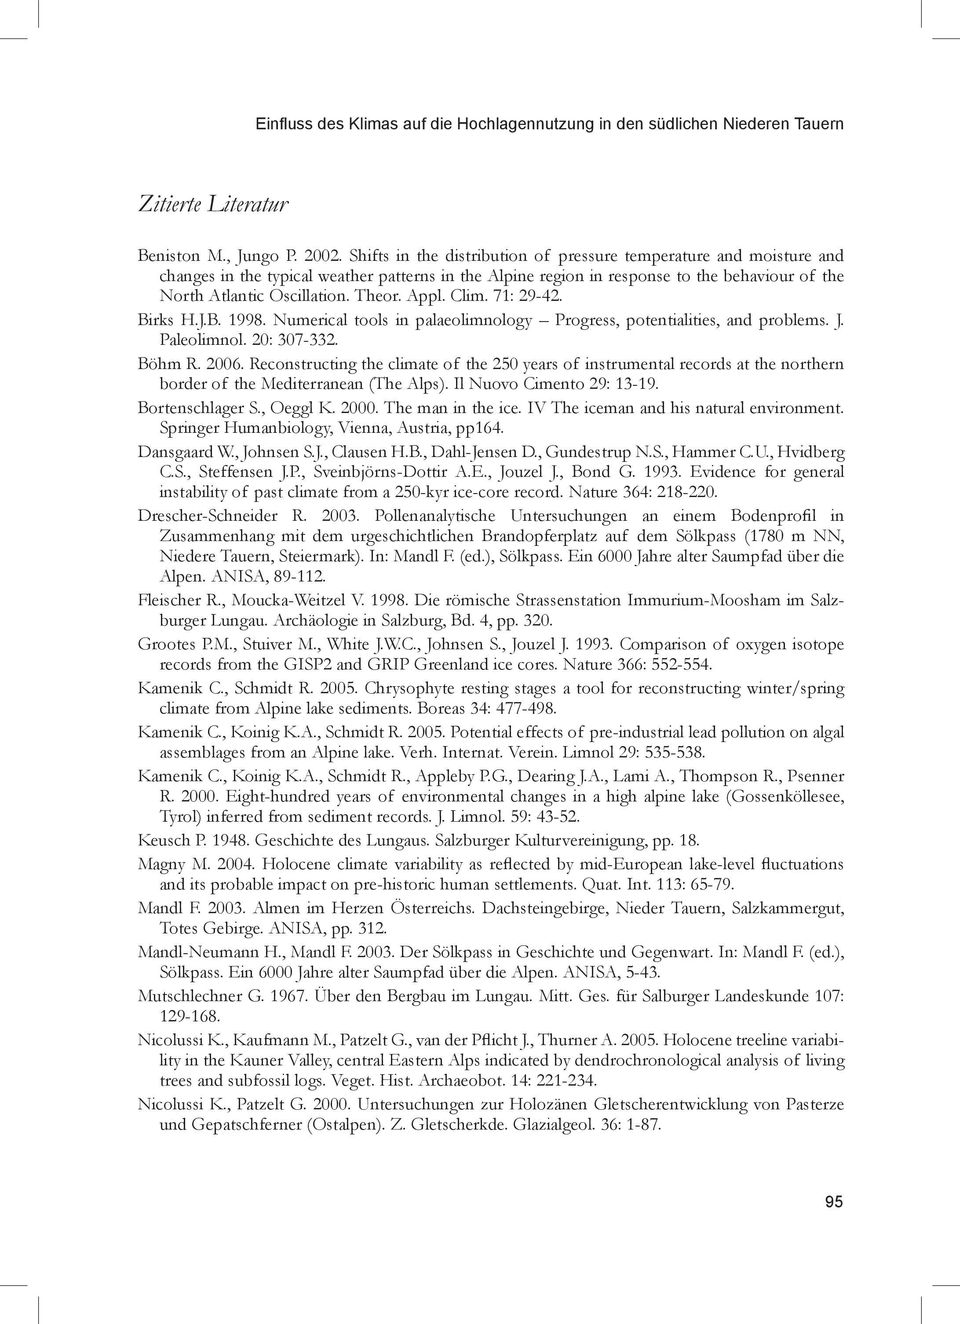 Appl. Clim. 71: 29-42. Birks H.J.B. 1998. Numerical tools in palaeolimnology Progress, potentialities, and problems. J. Paleolimnol. 20: 307-332. Böhm R. 2006.